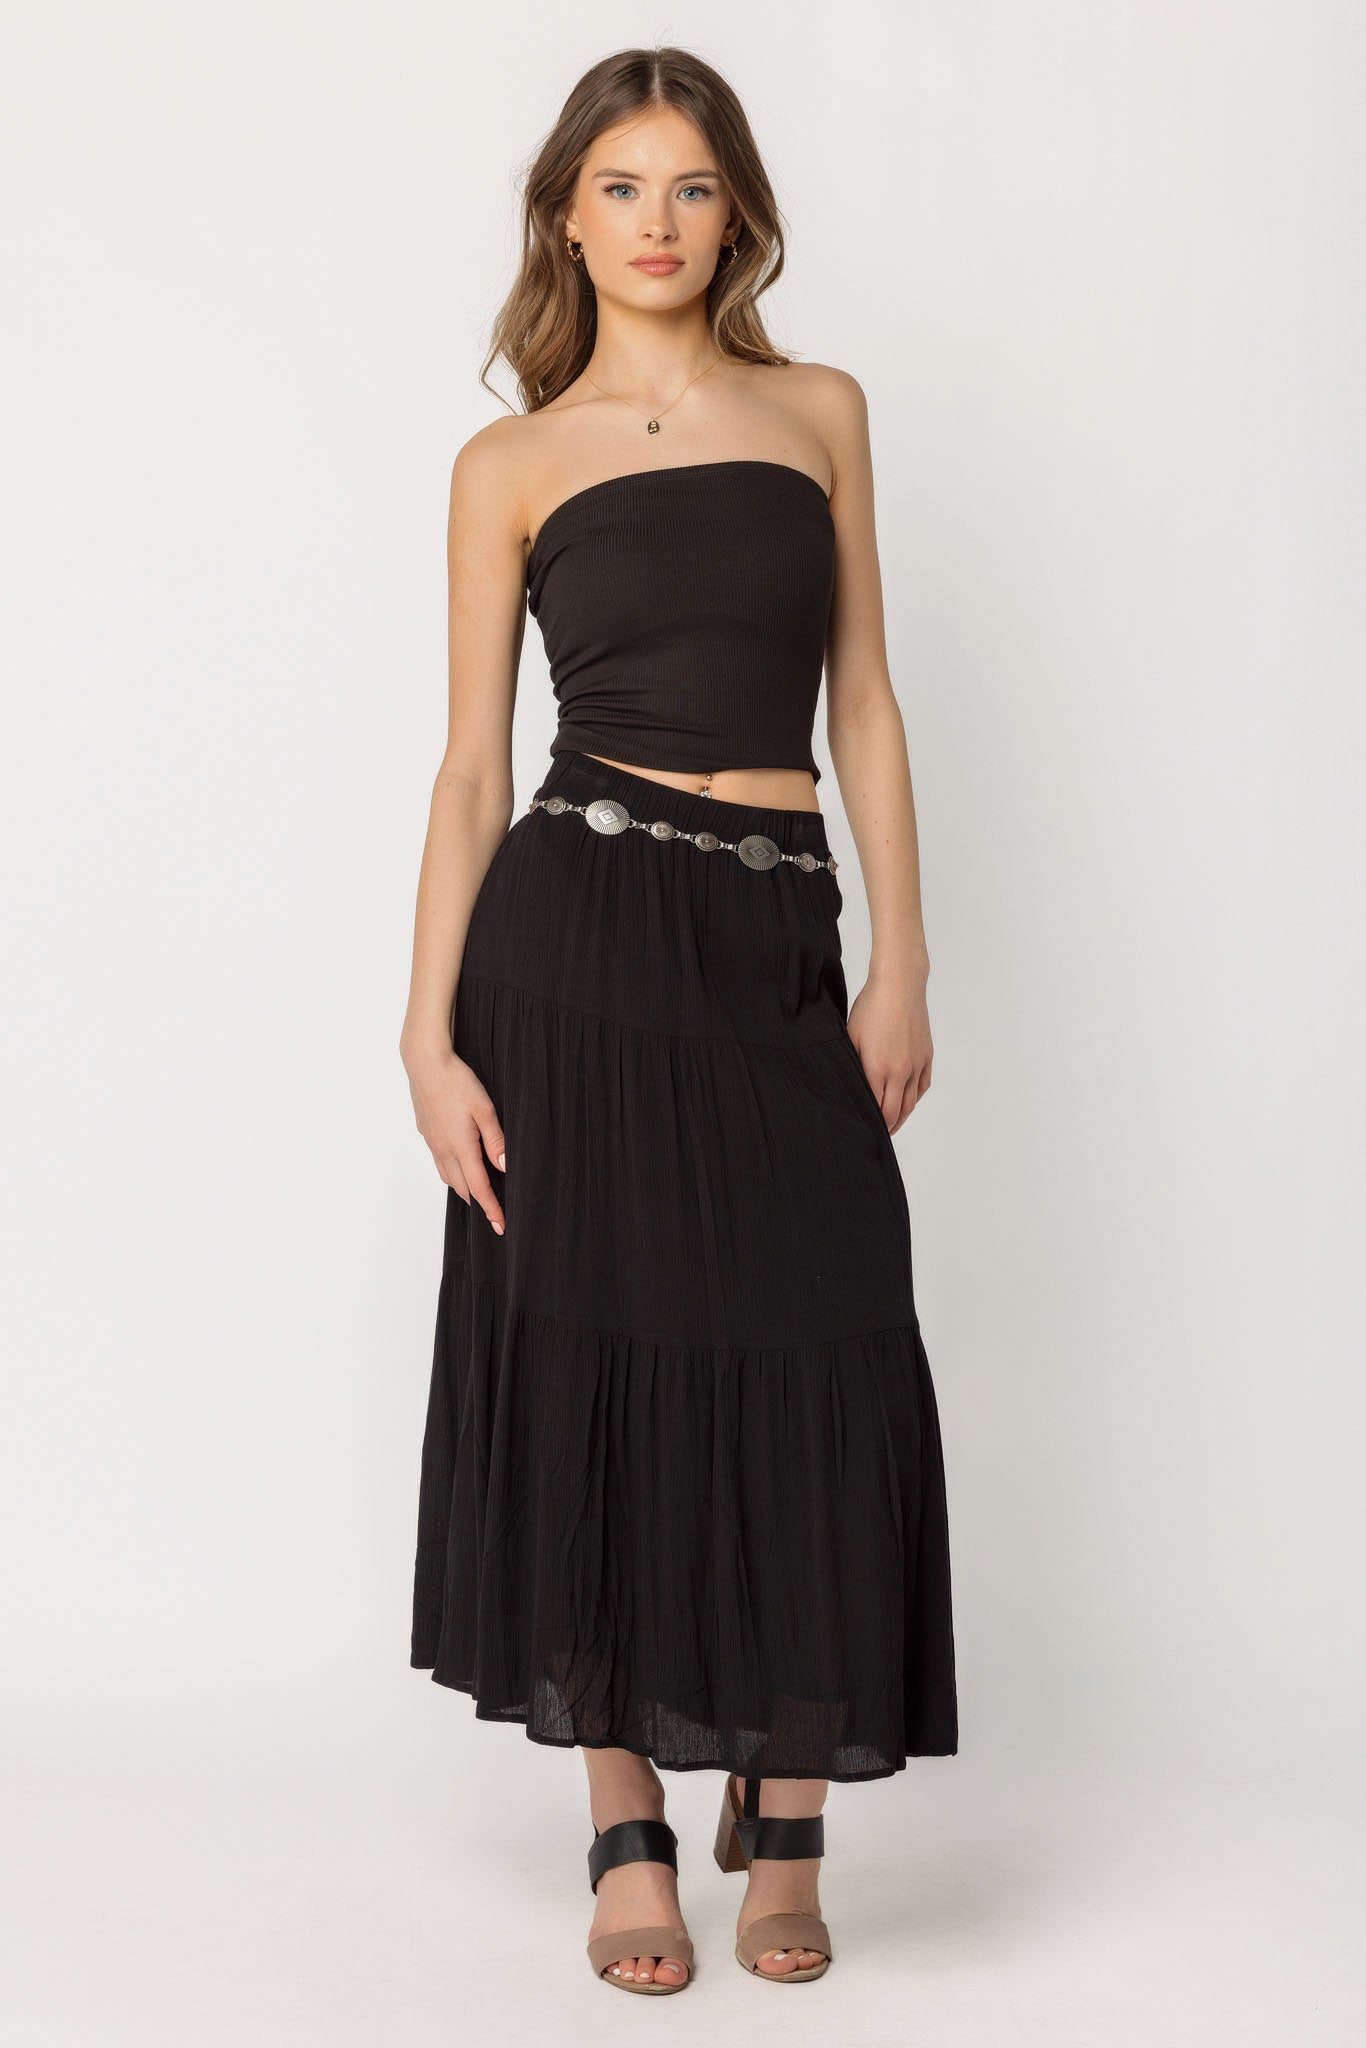 Black Gauze Peasant Maxi Skirt with Metal Belt